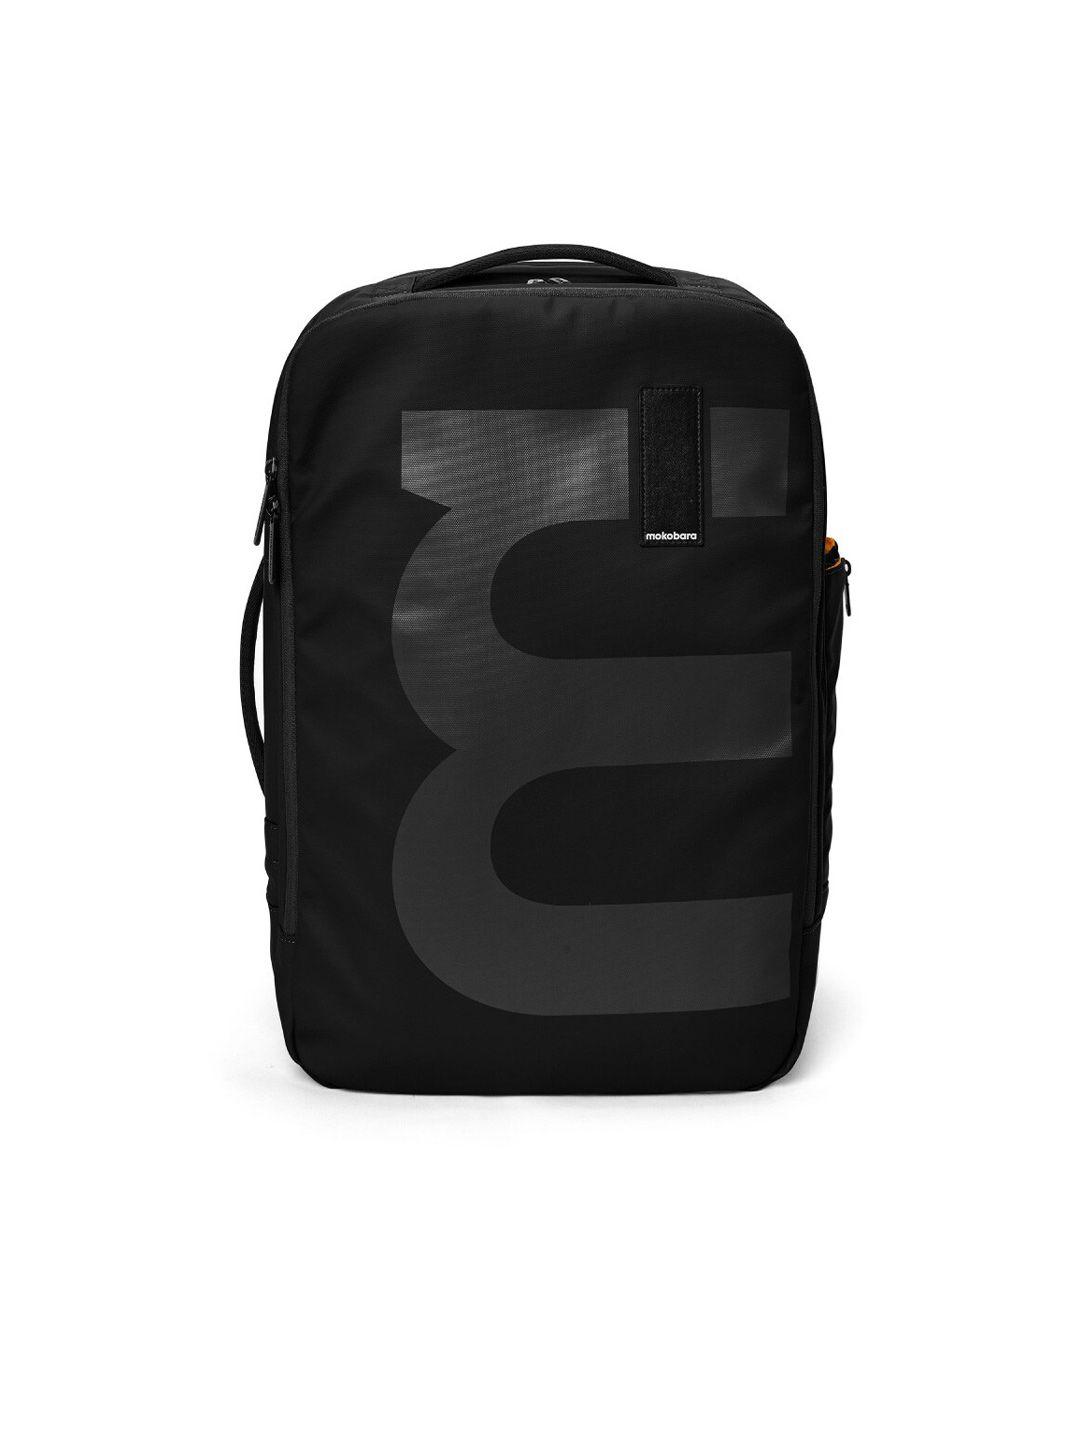 mokobara unisex contrast detail 16 inch laptop backpack